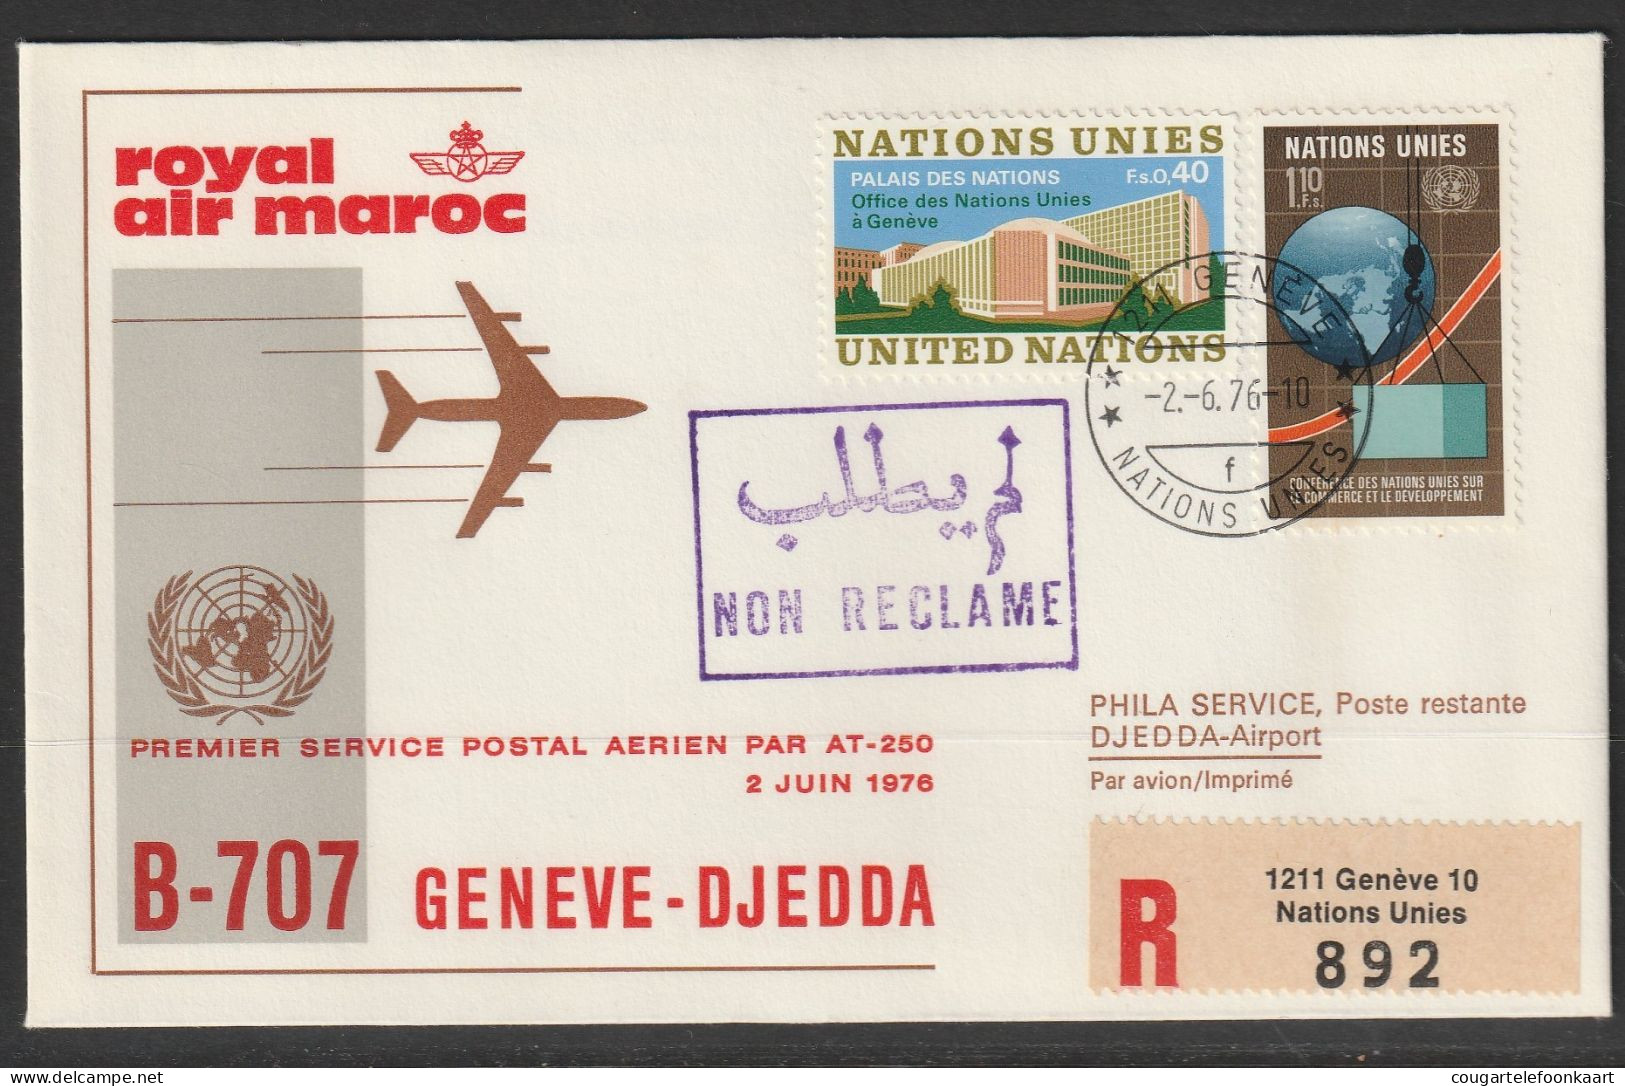 1976, Royal Air Maroc, Erstflug, Genf UN - Djedda - Erst- U. Sonderflugbriefe